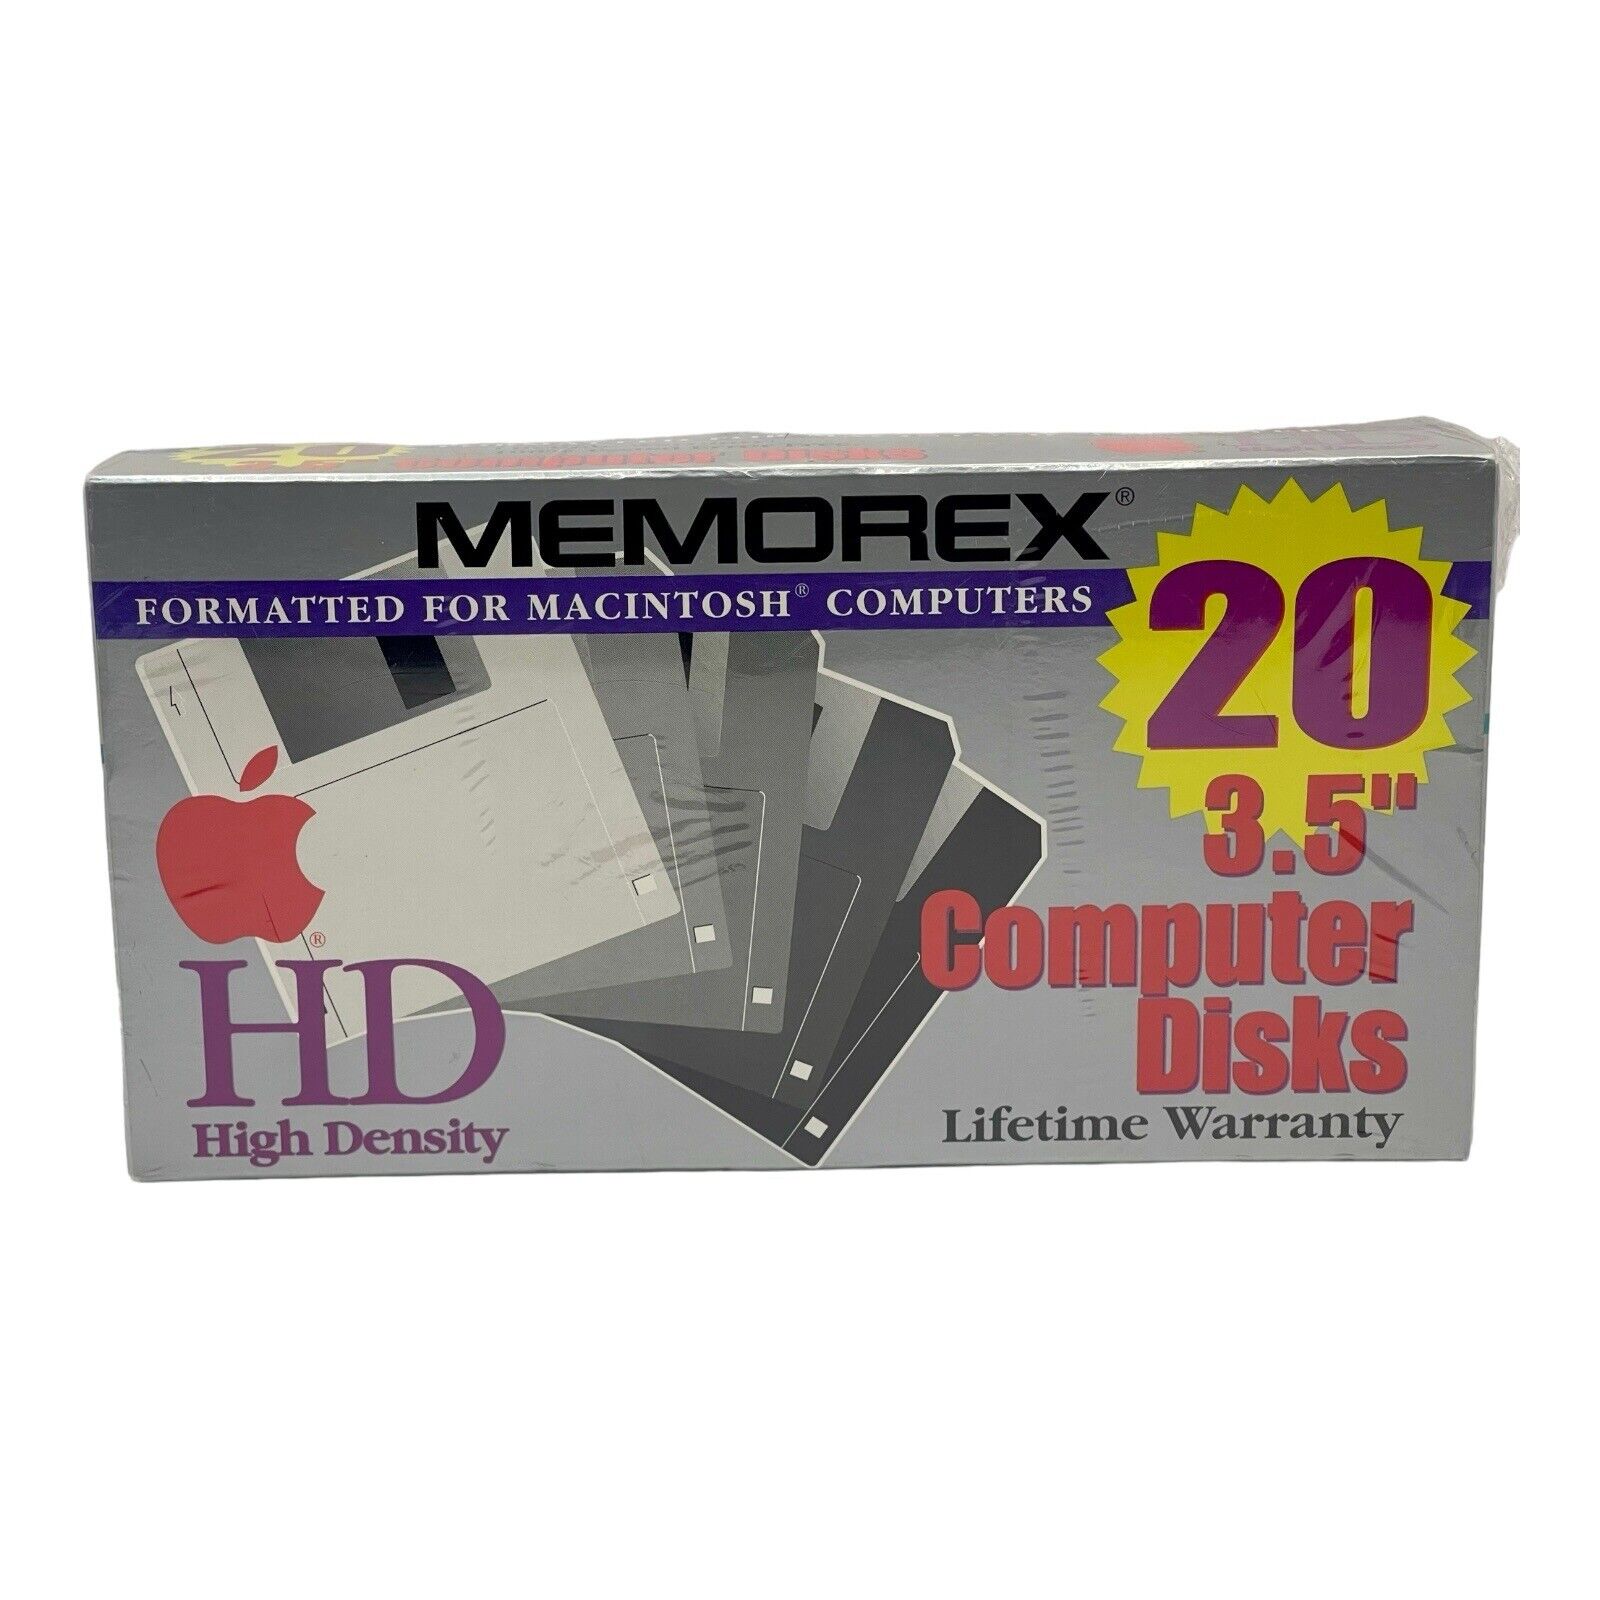 Memorex HD High Density 20 Pack 3.5” Computer Floppy New Sealed Macintosh Format